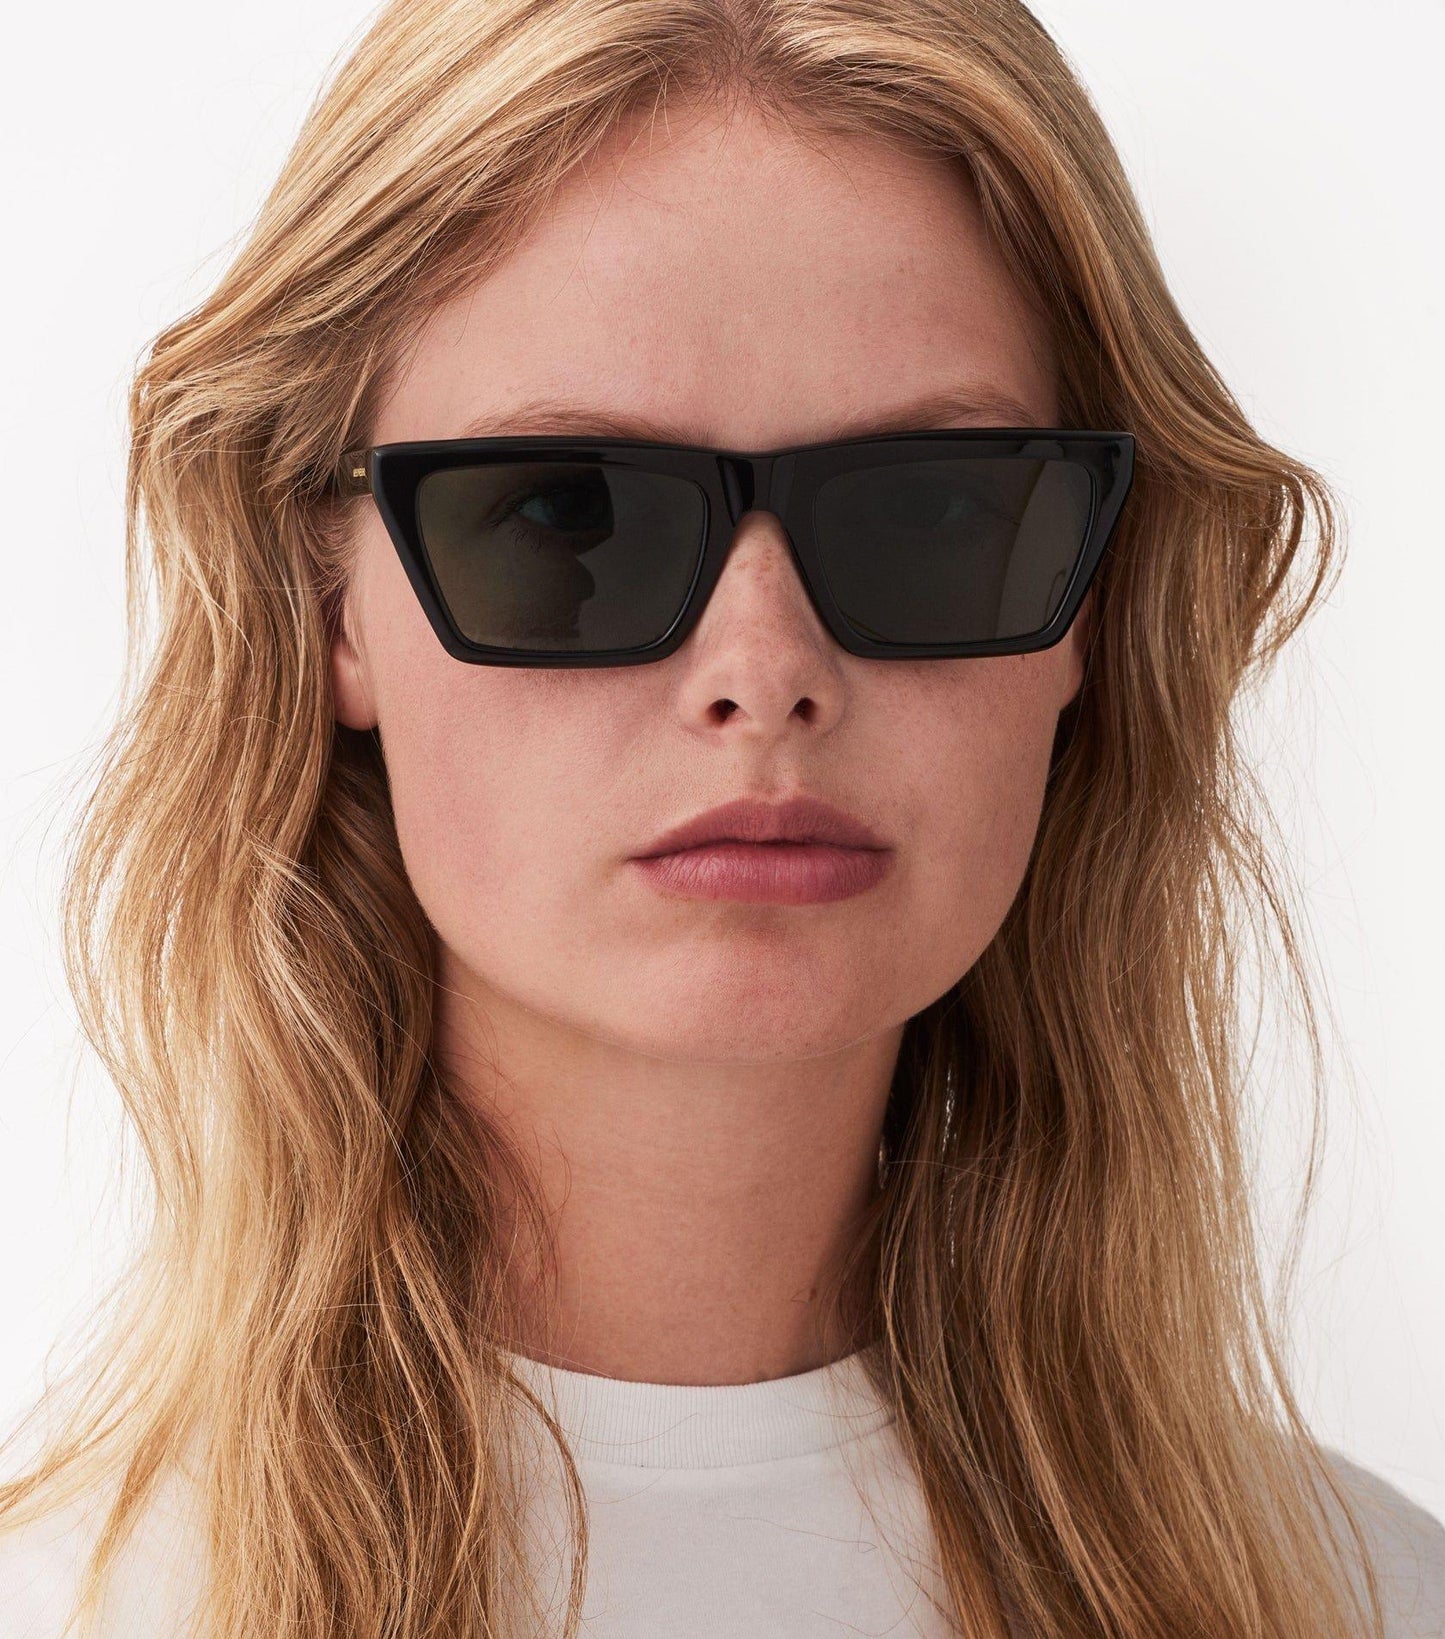 Corey, Rectangular sunglasses for men and women green lens UV400 protection